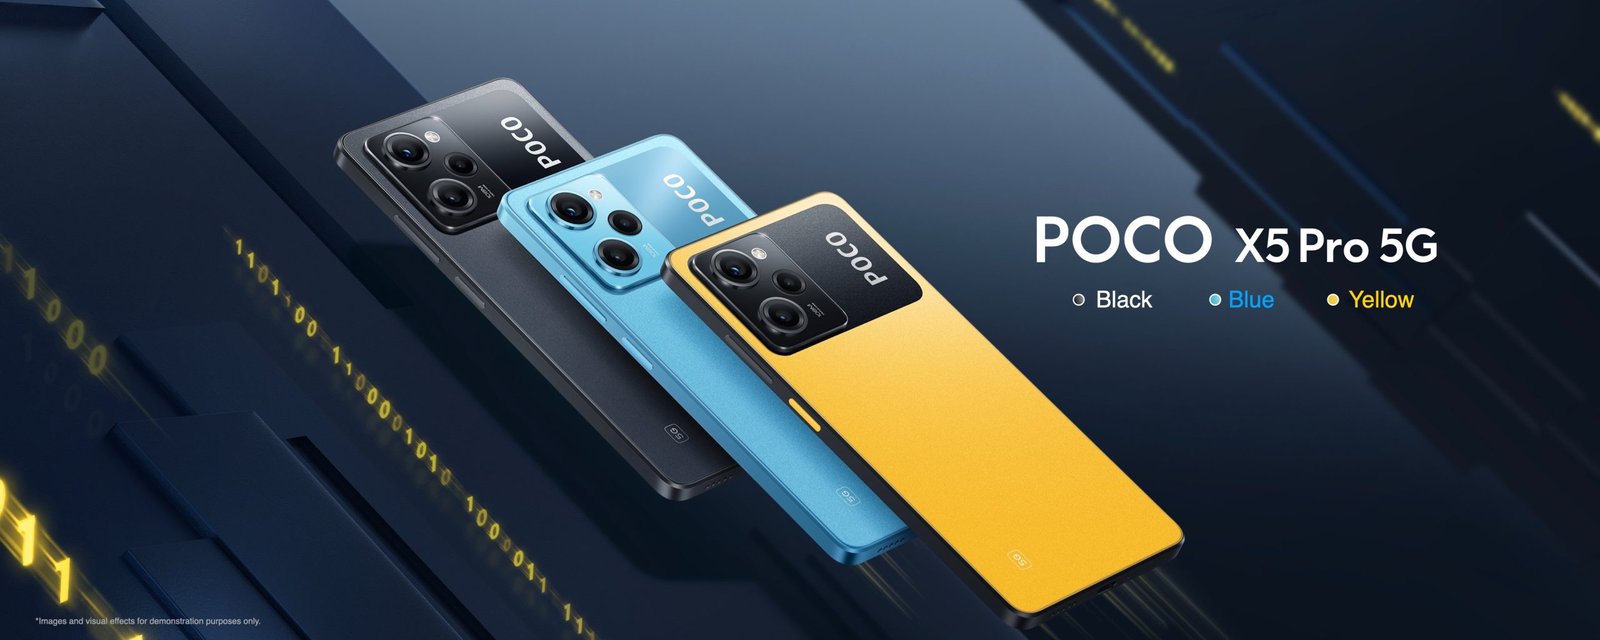 POCO X5 Pro 5G poster